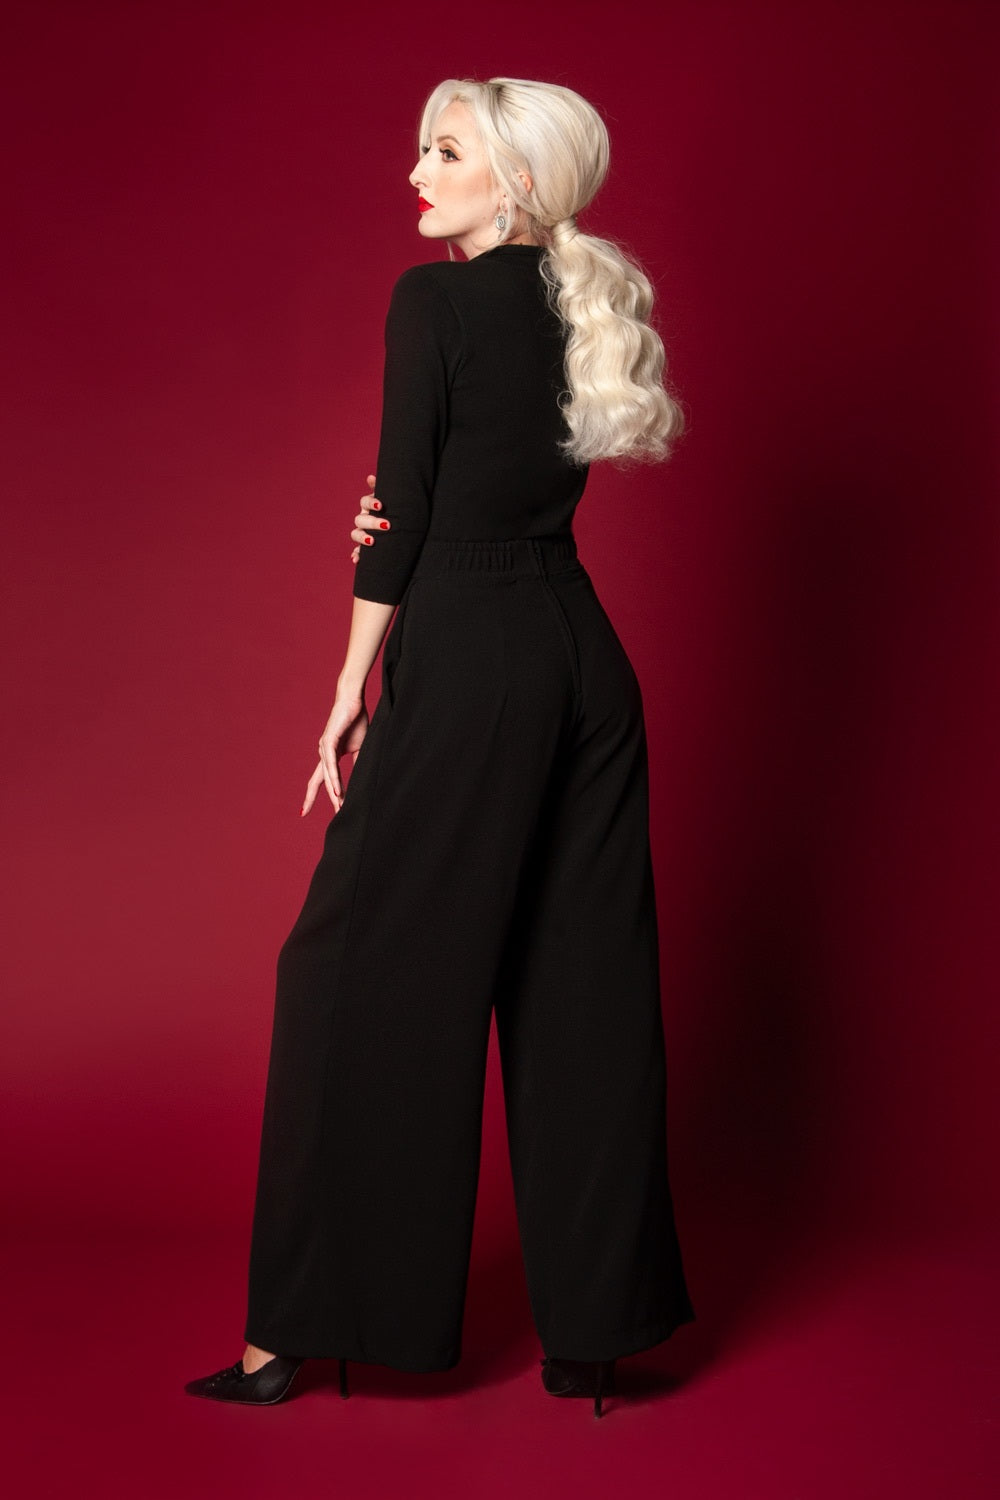 Laura Byrnes California Doris Pants in Black with 32" Inseam